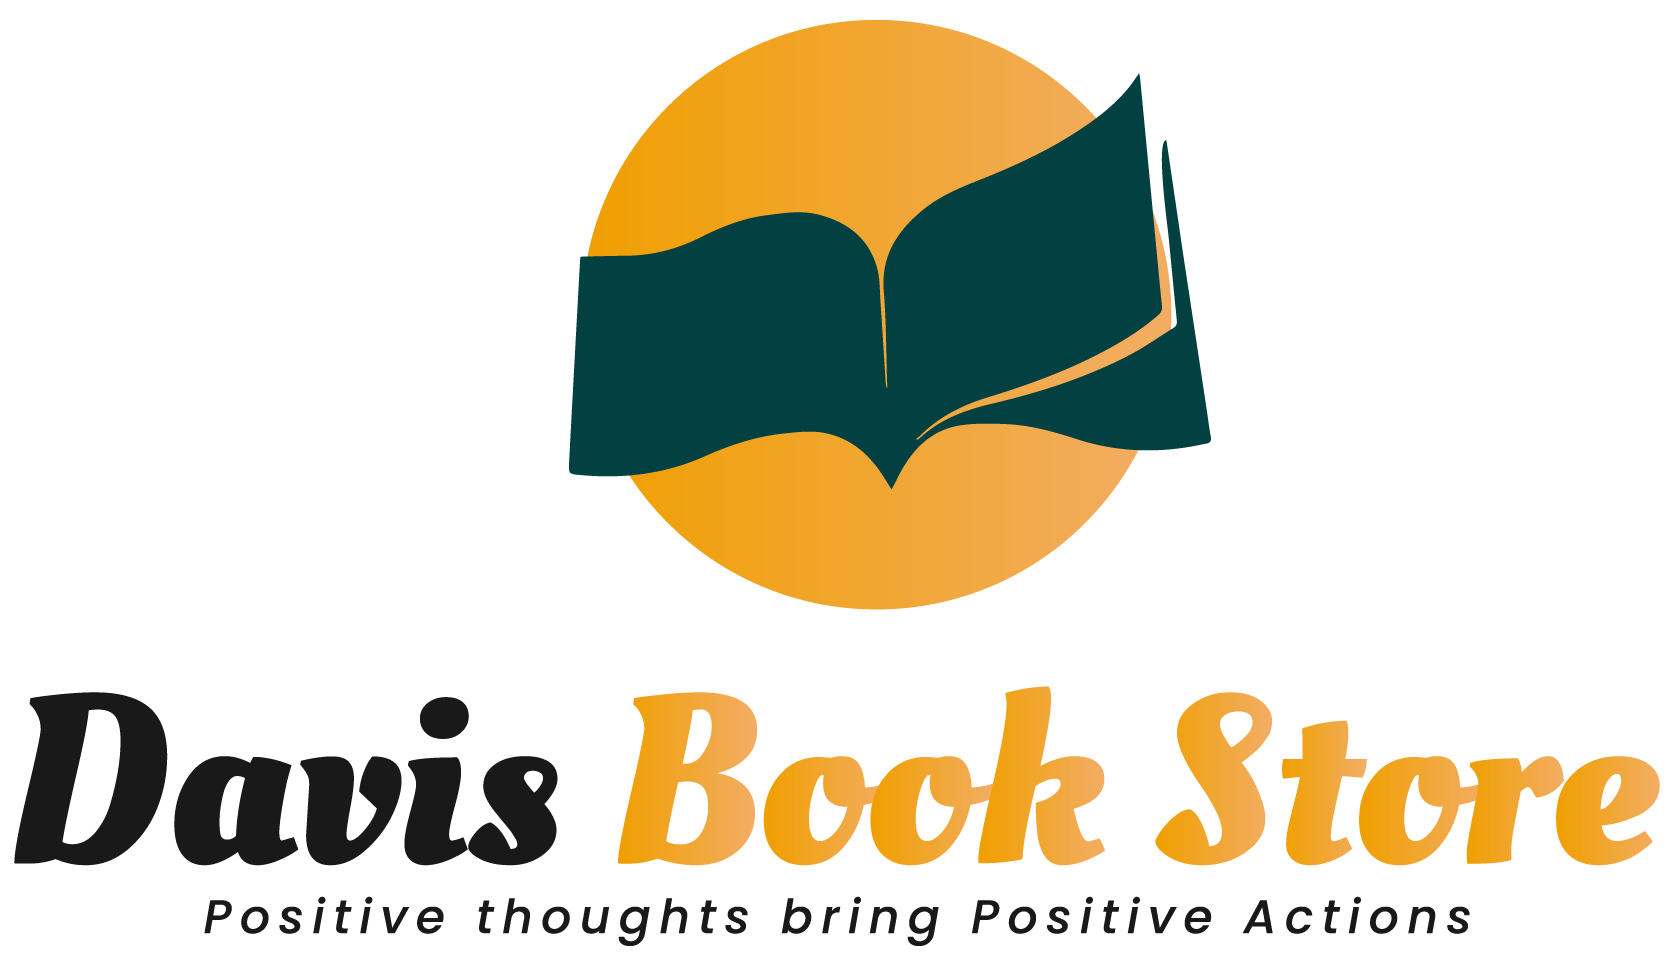 Davis Books Store